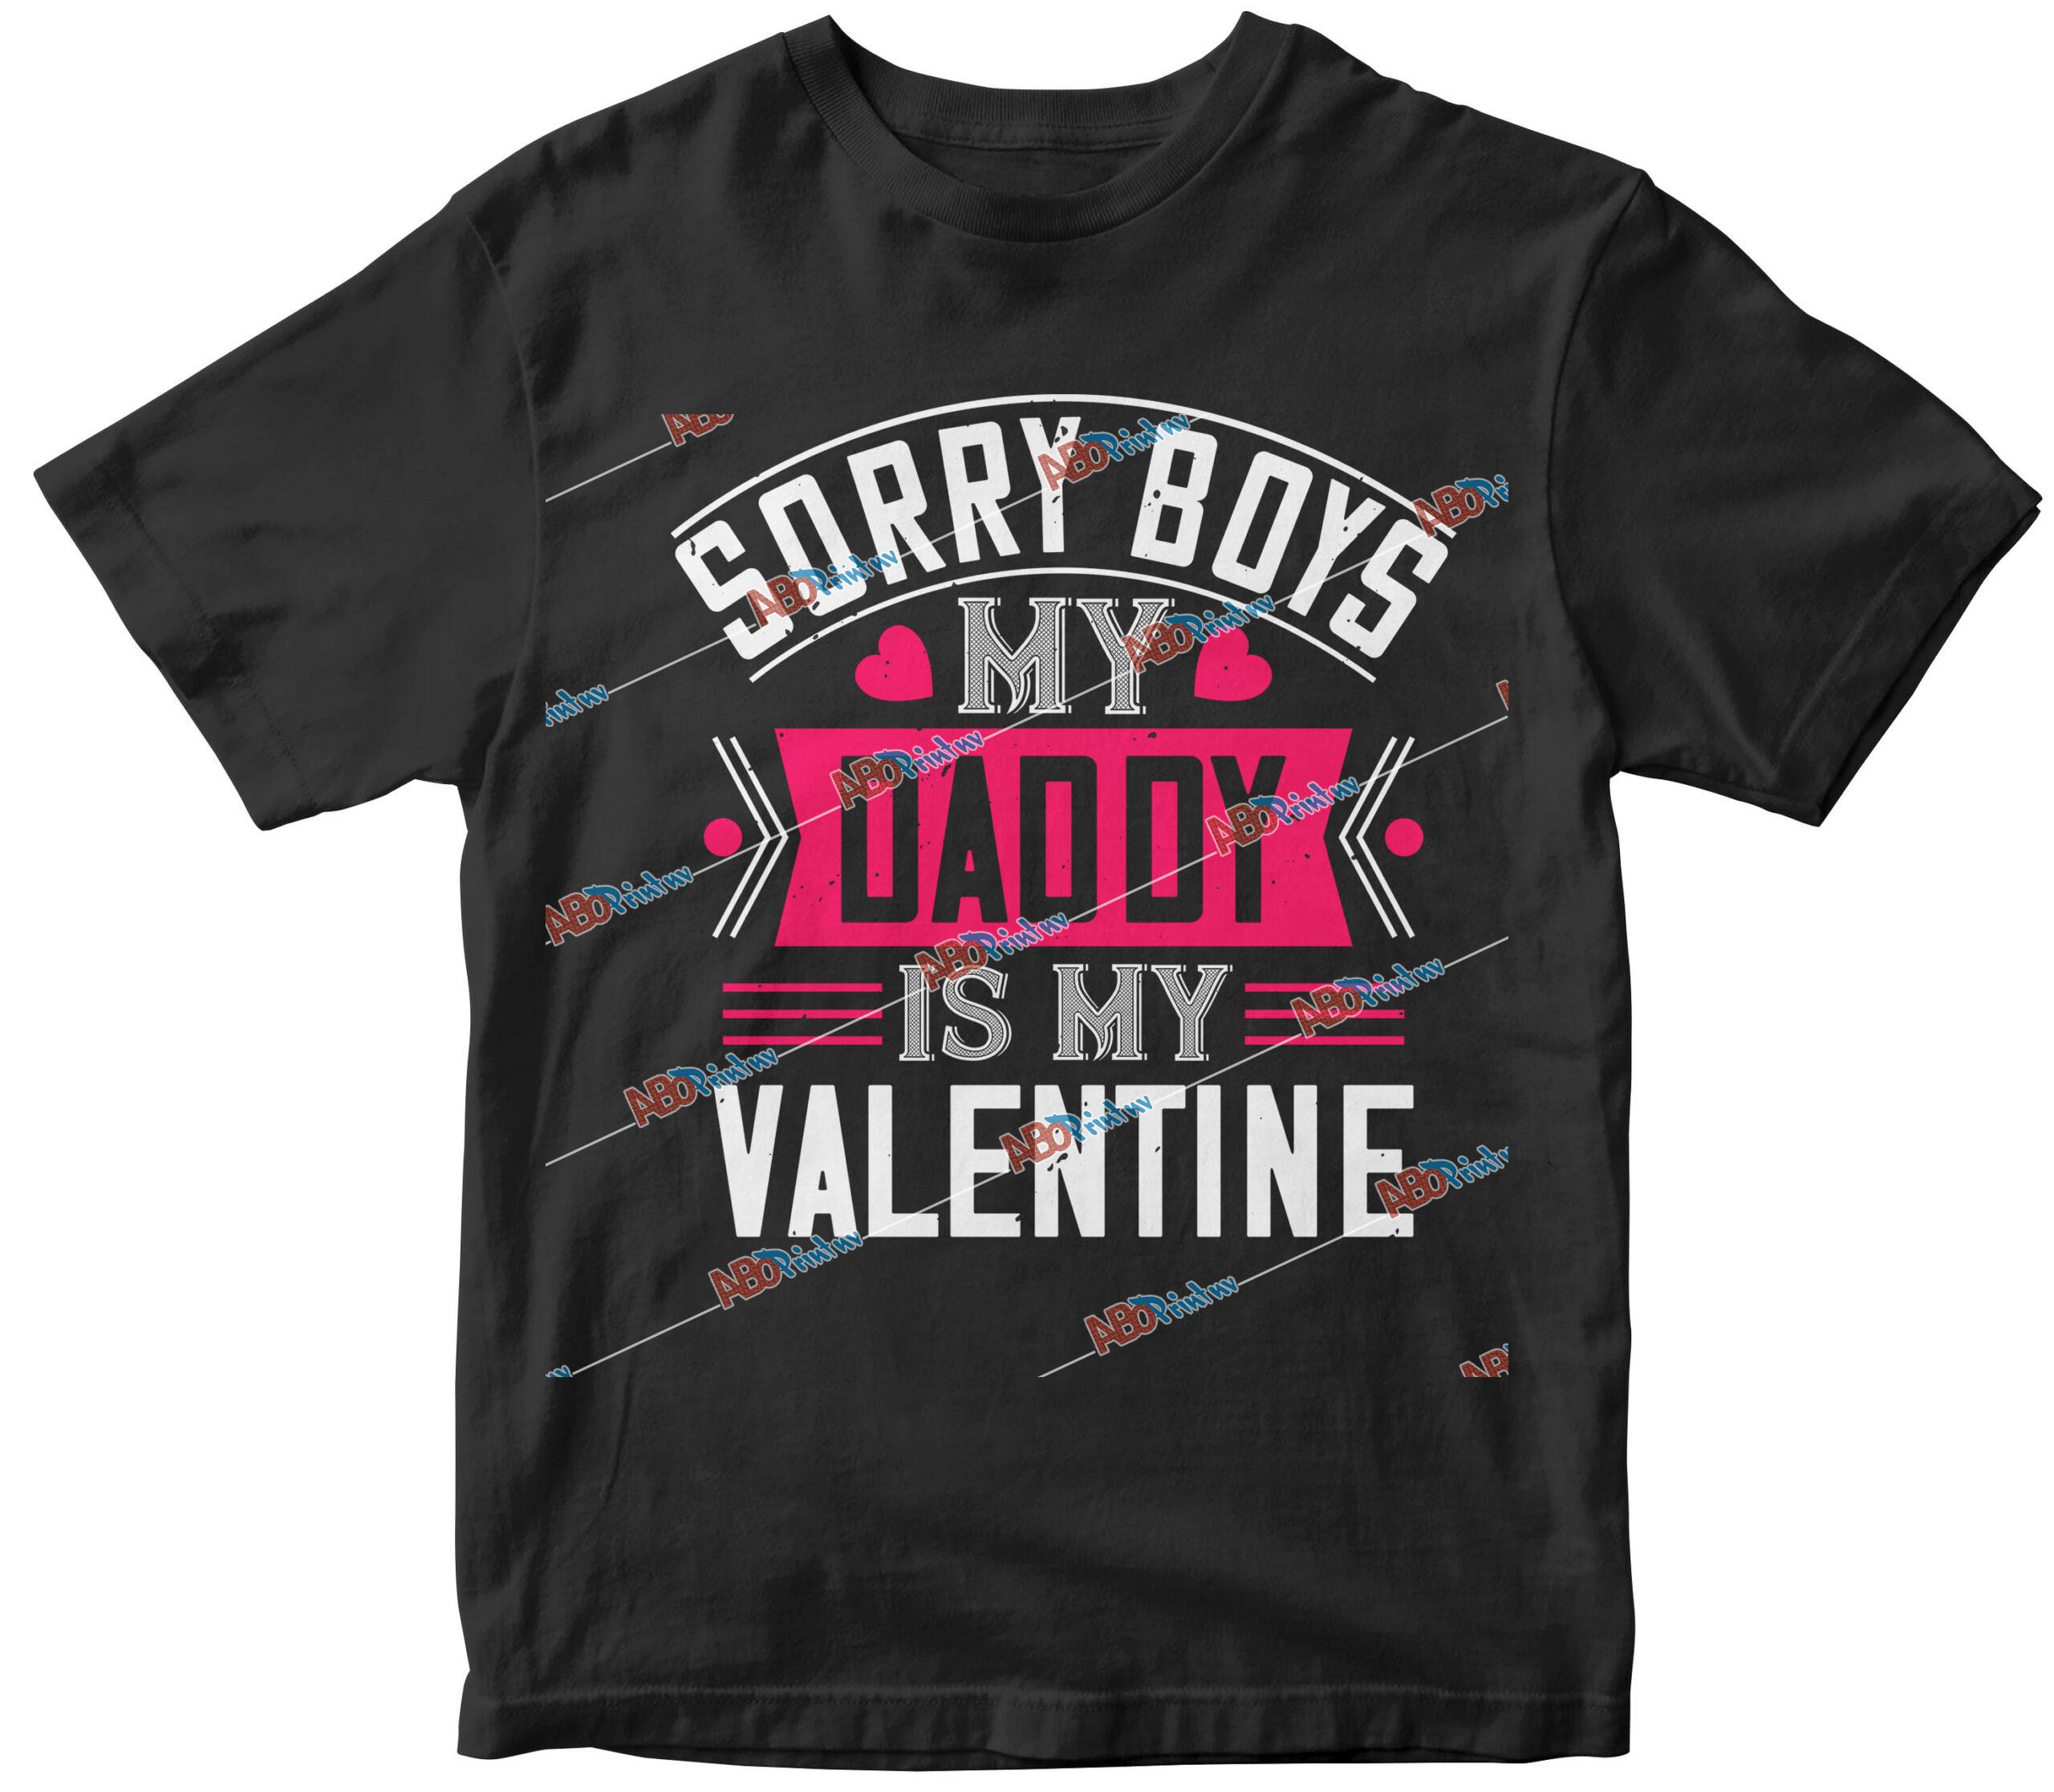 sorry boys my daddy is my valentine.jpg